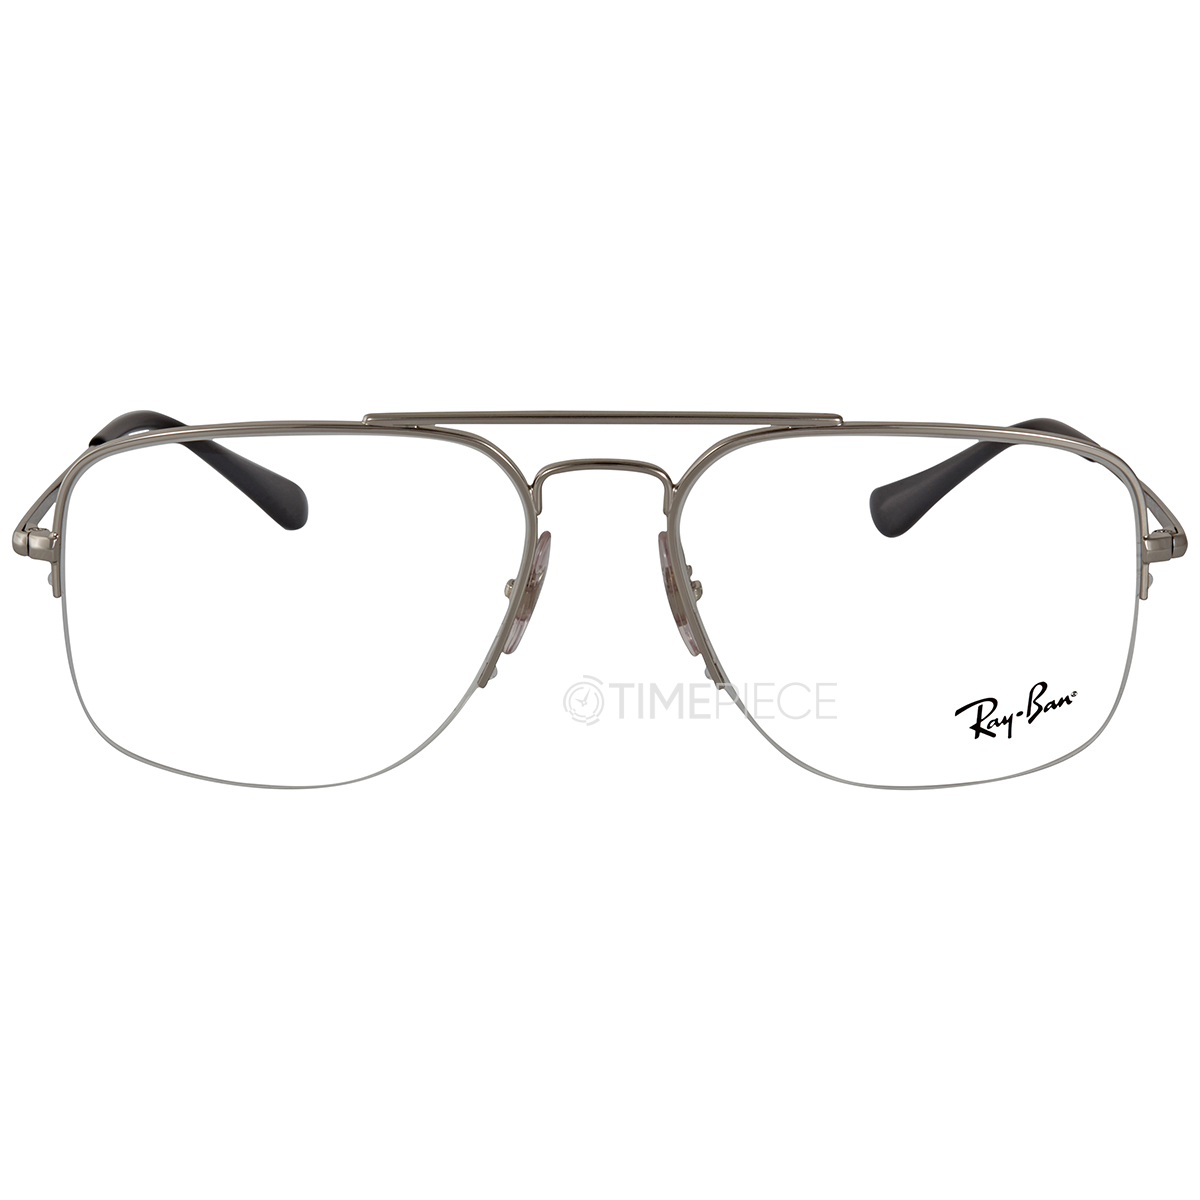 Ray Ban Transparent Square Mens Eyeglasses RB6441 2501 56